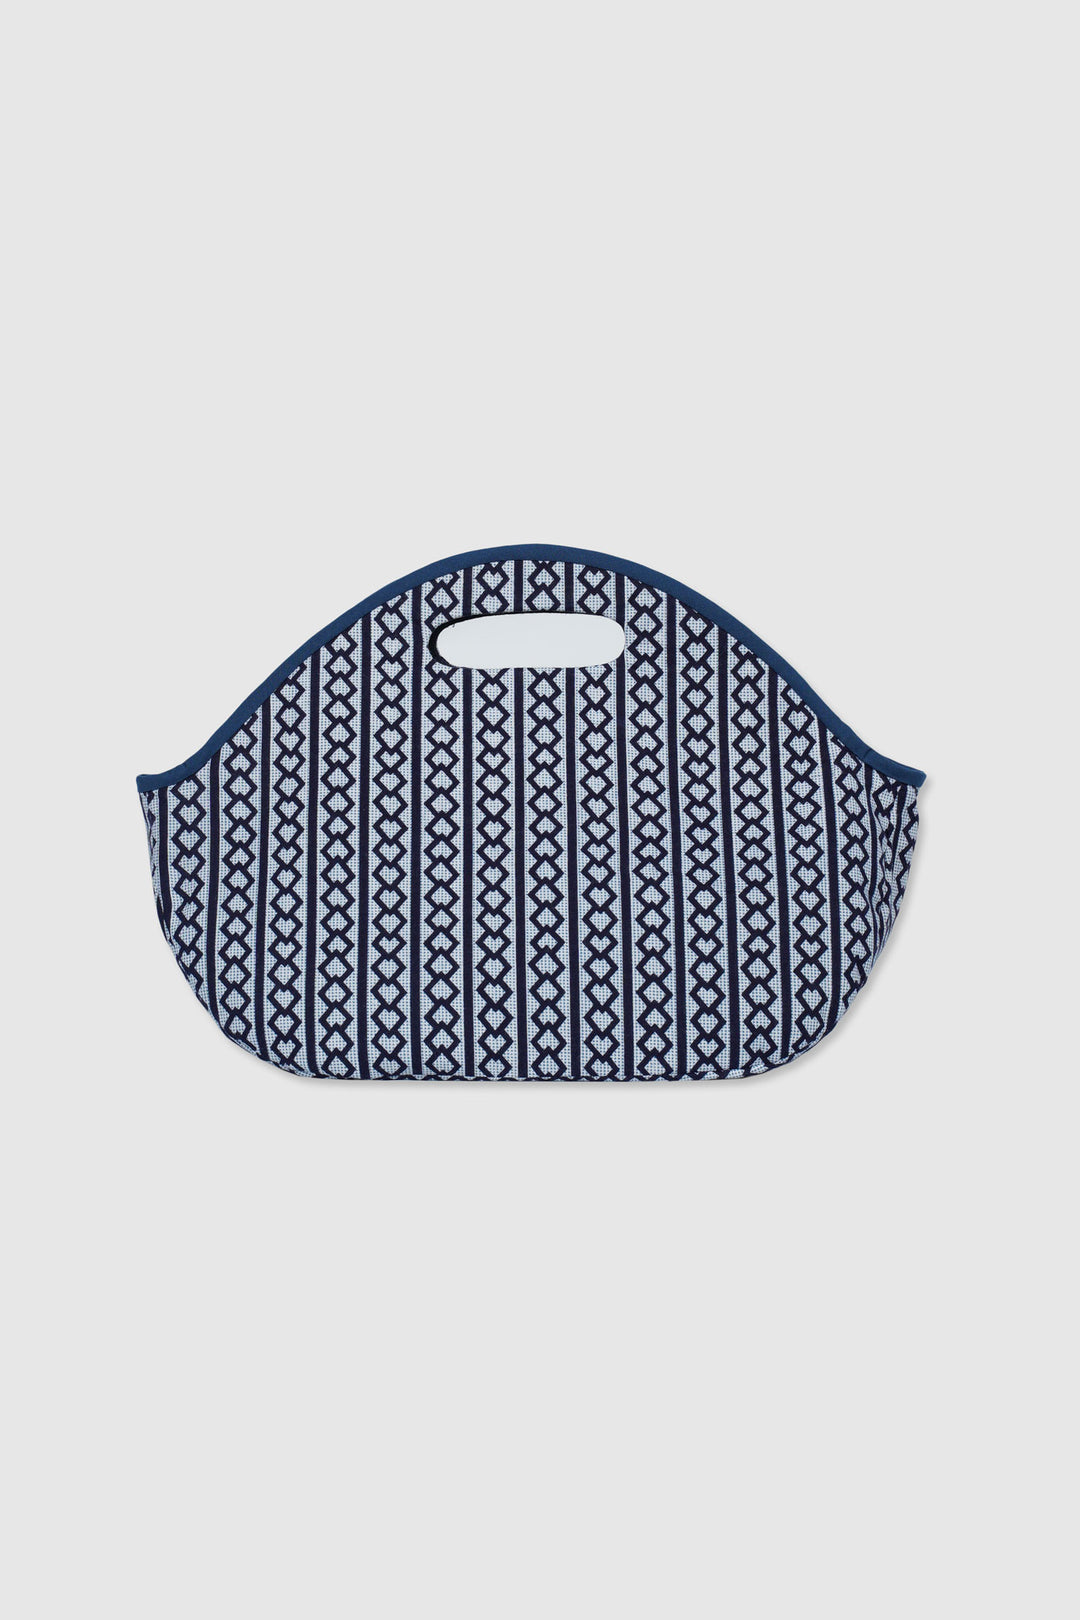 Japanese Cotton Geometric Print for a Contemporary Bag